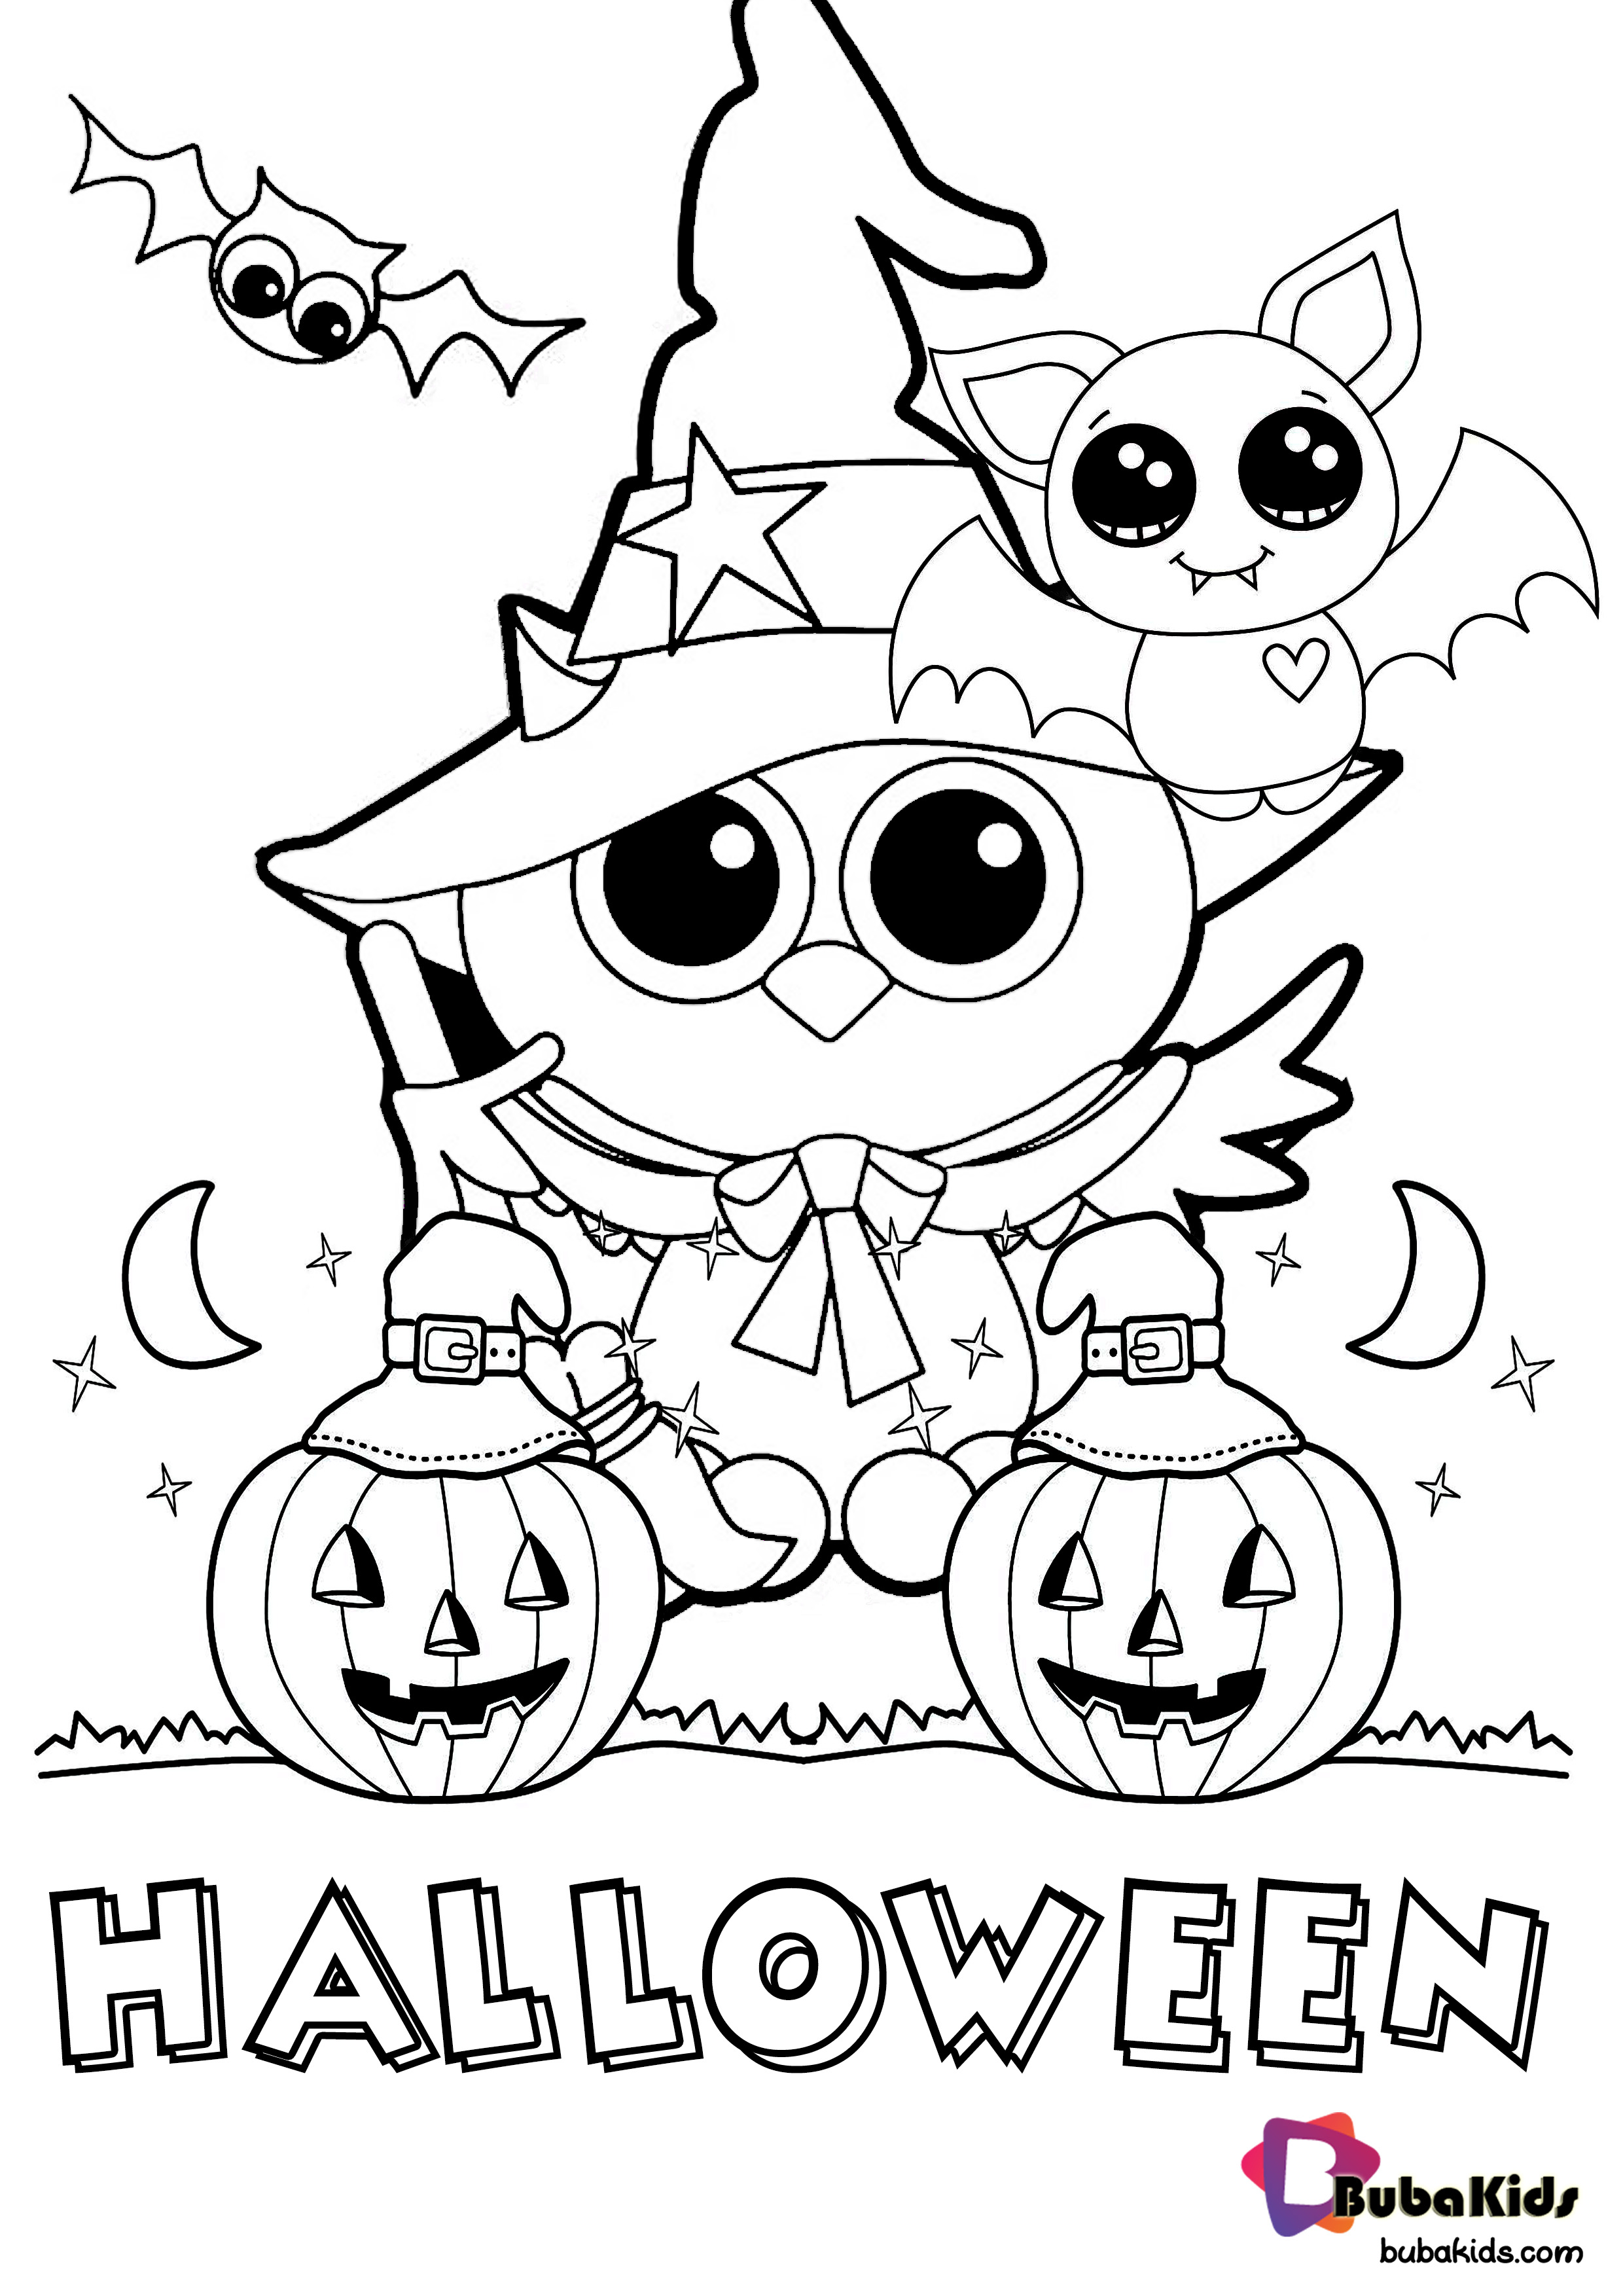 Halloween Coloring Page Printable